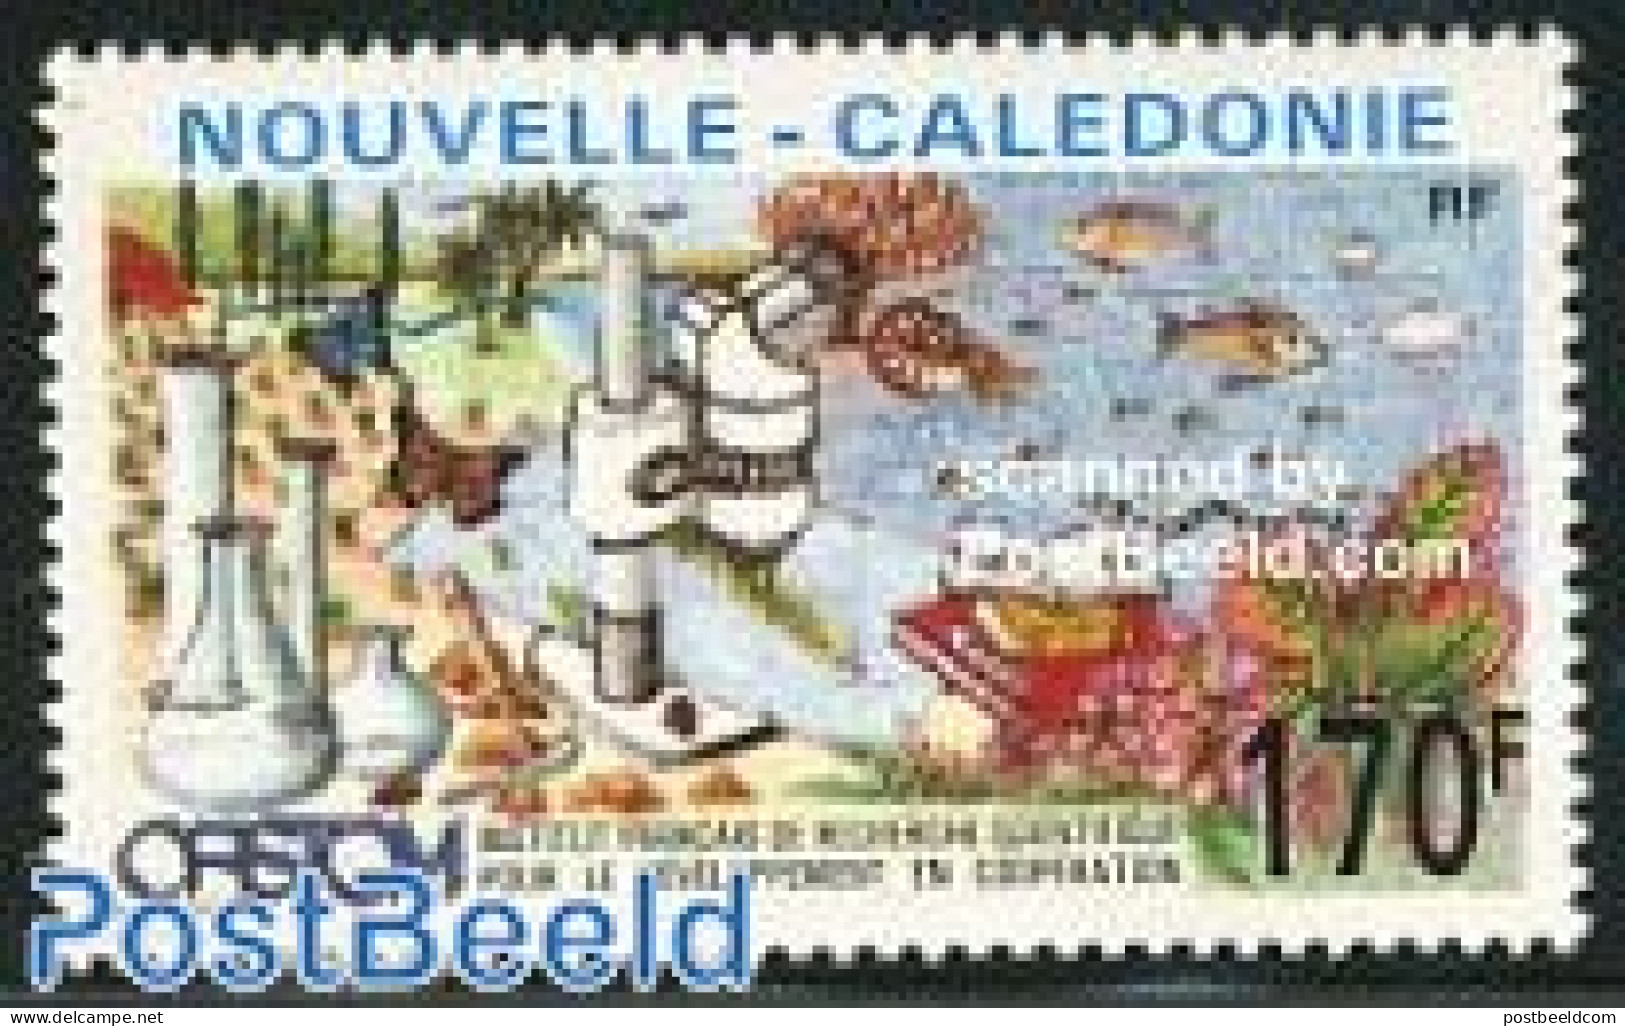 New Caledonia 1991 Science 1v, Mint NH, Nature - Science - Butterflies - Fish - Chemistry & Chemists - Art - Books - Ongebruikt